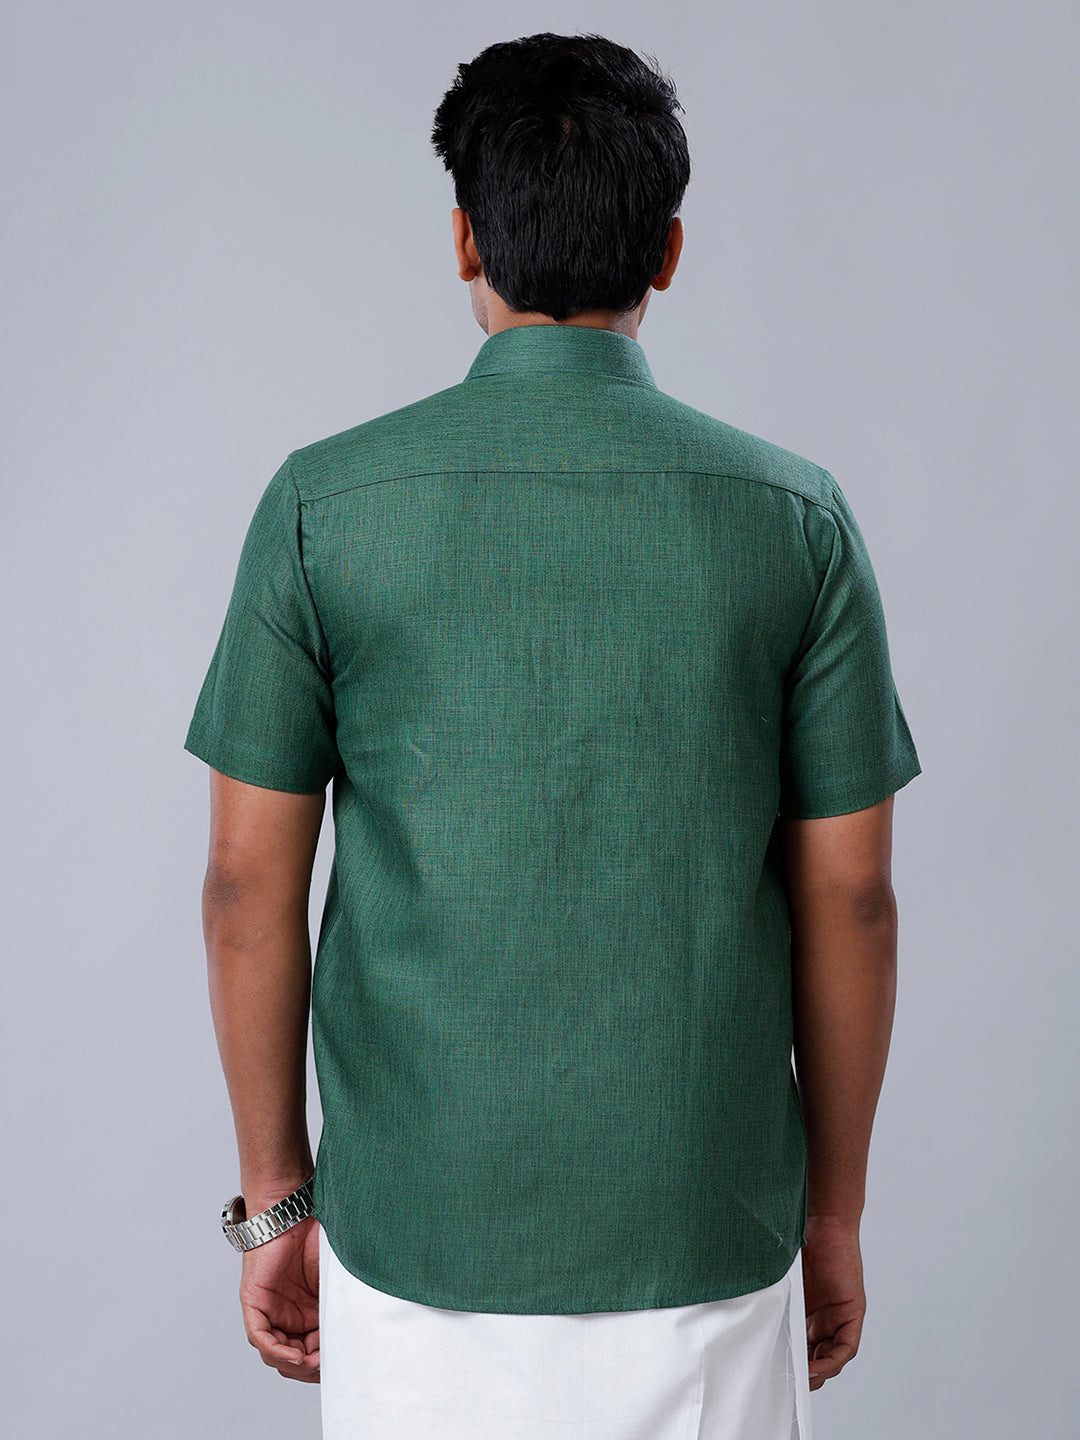 Mens Formal Shirt Half Sleeves Dark Green T26 TB9-Back view